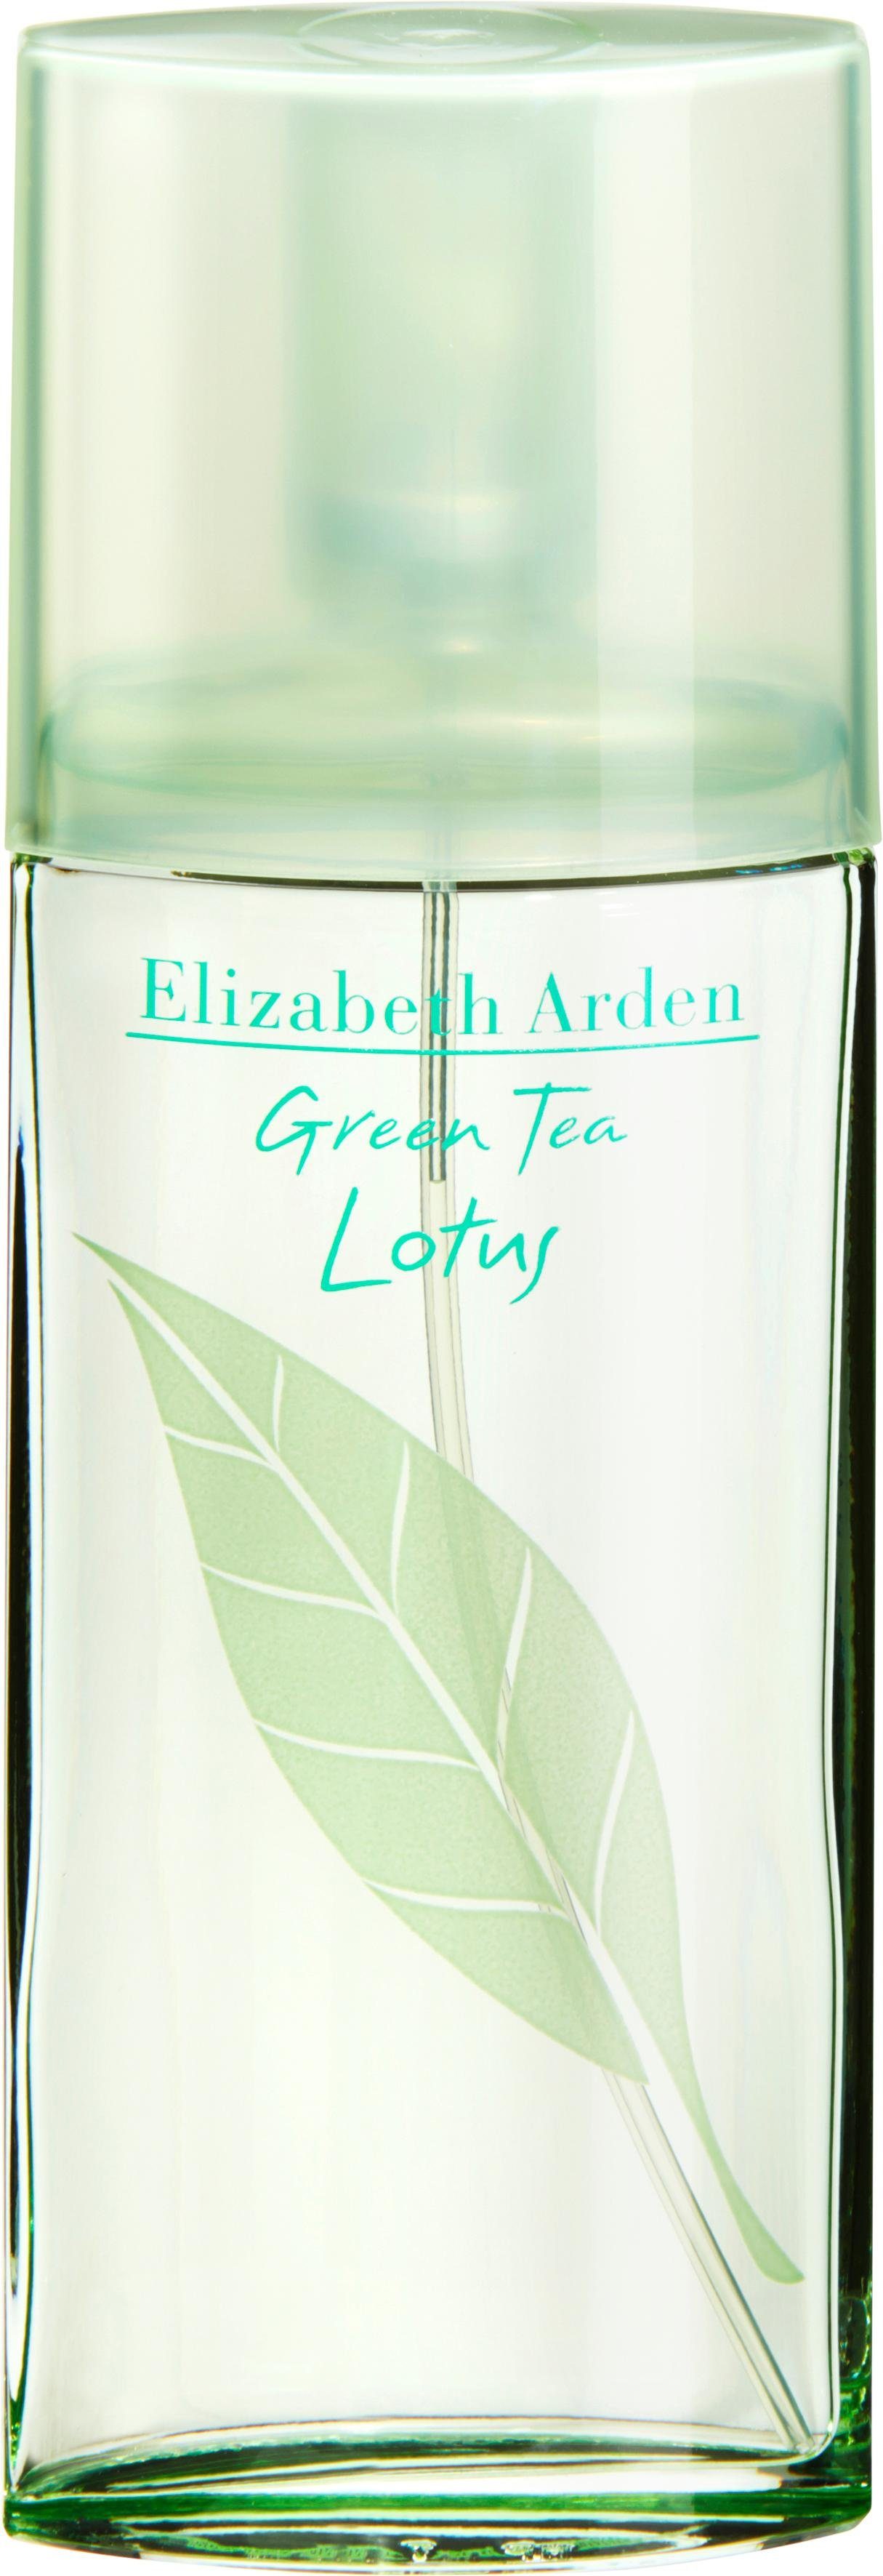 Elizabeth Arden Eau de Toilette Tea Green Lotus